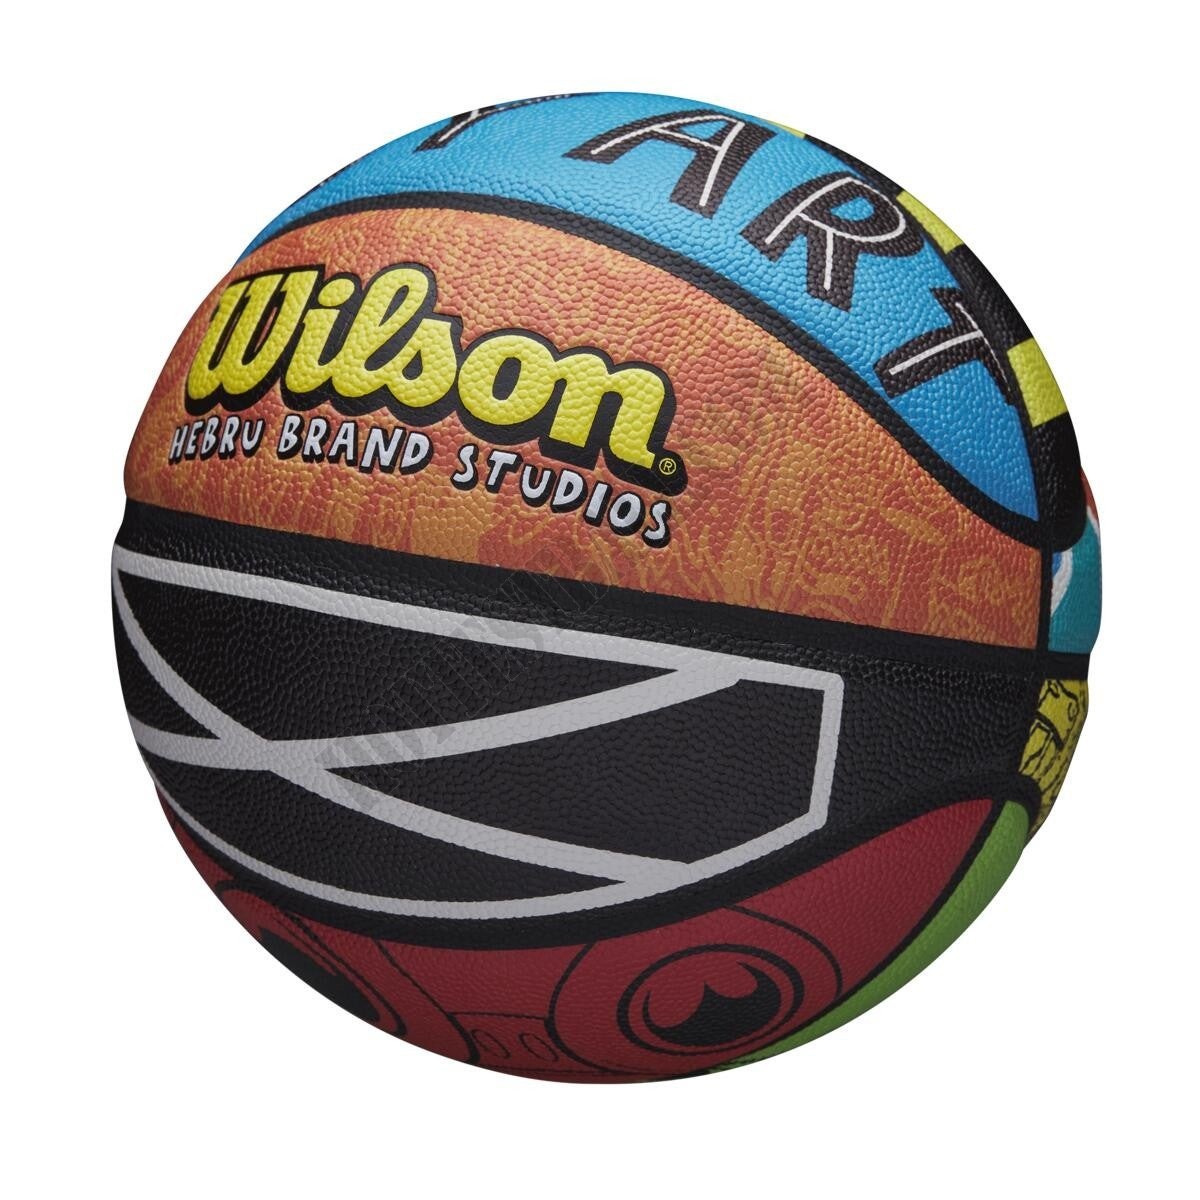 Hebru Brand Studios Champions Edition Basketball - Wilson Discount Store - -6